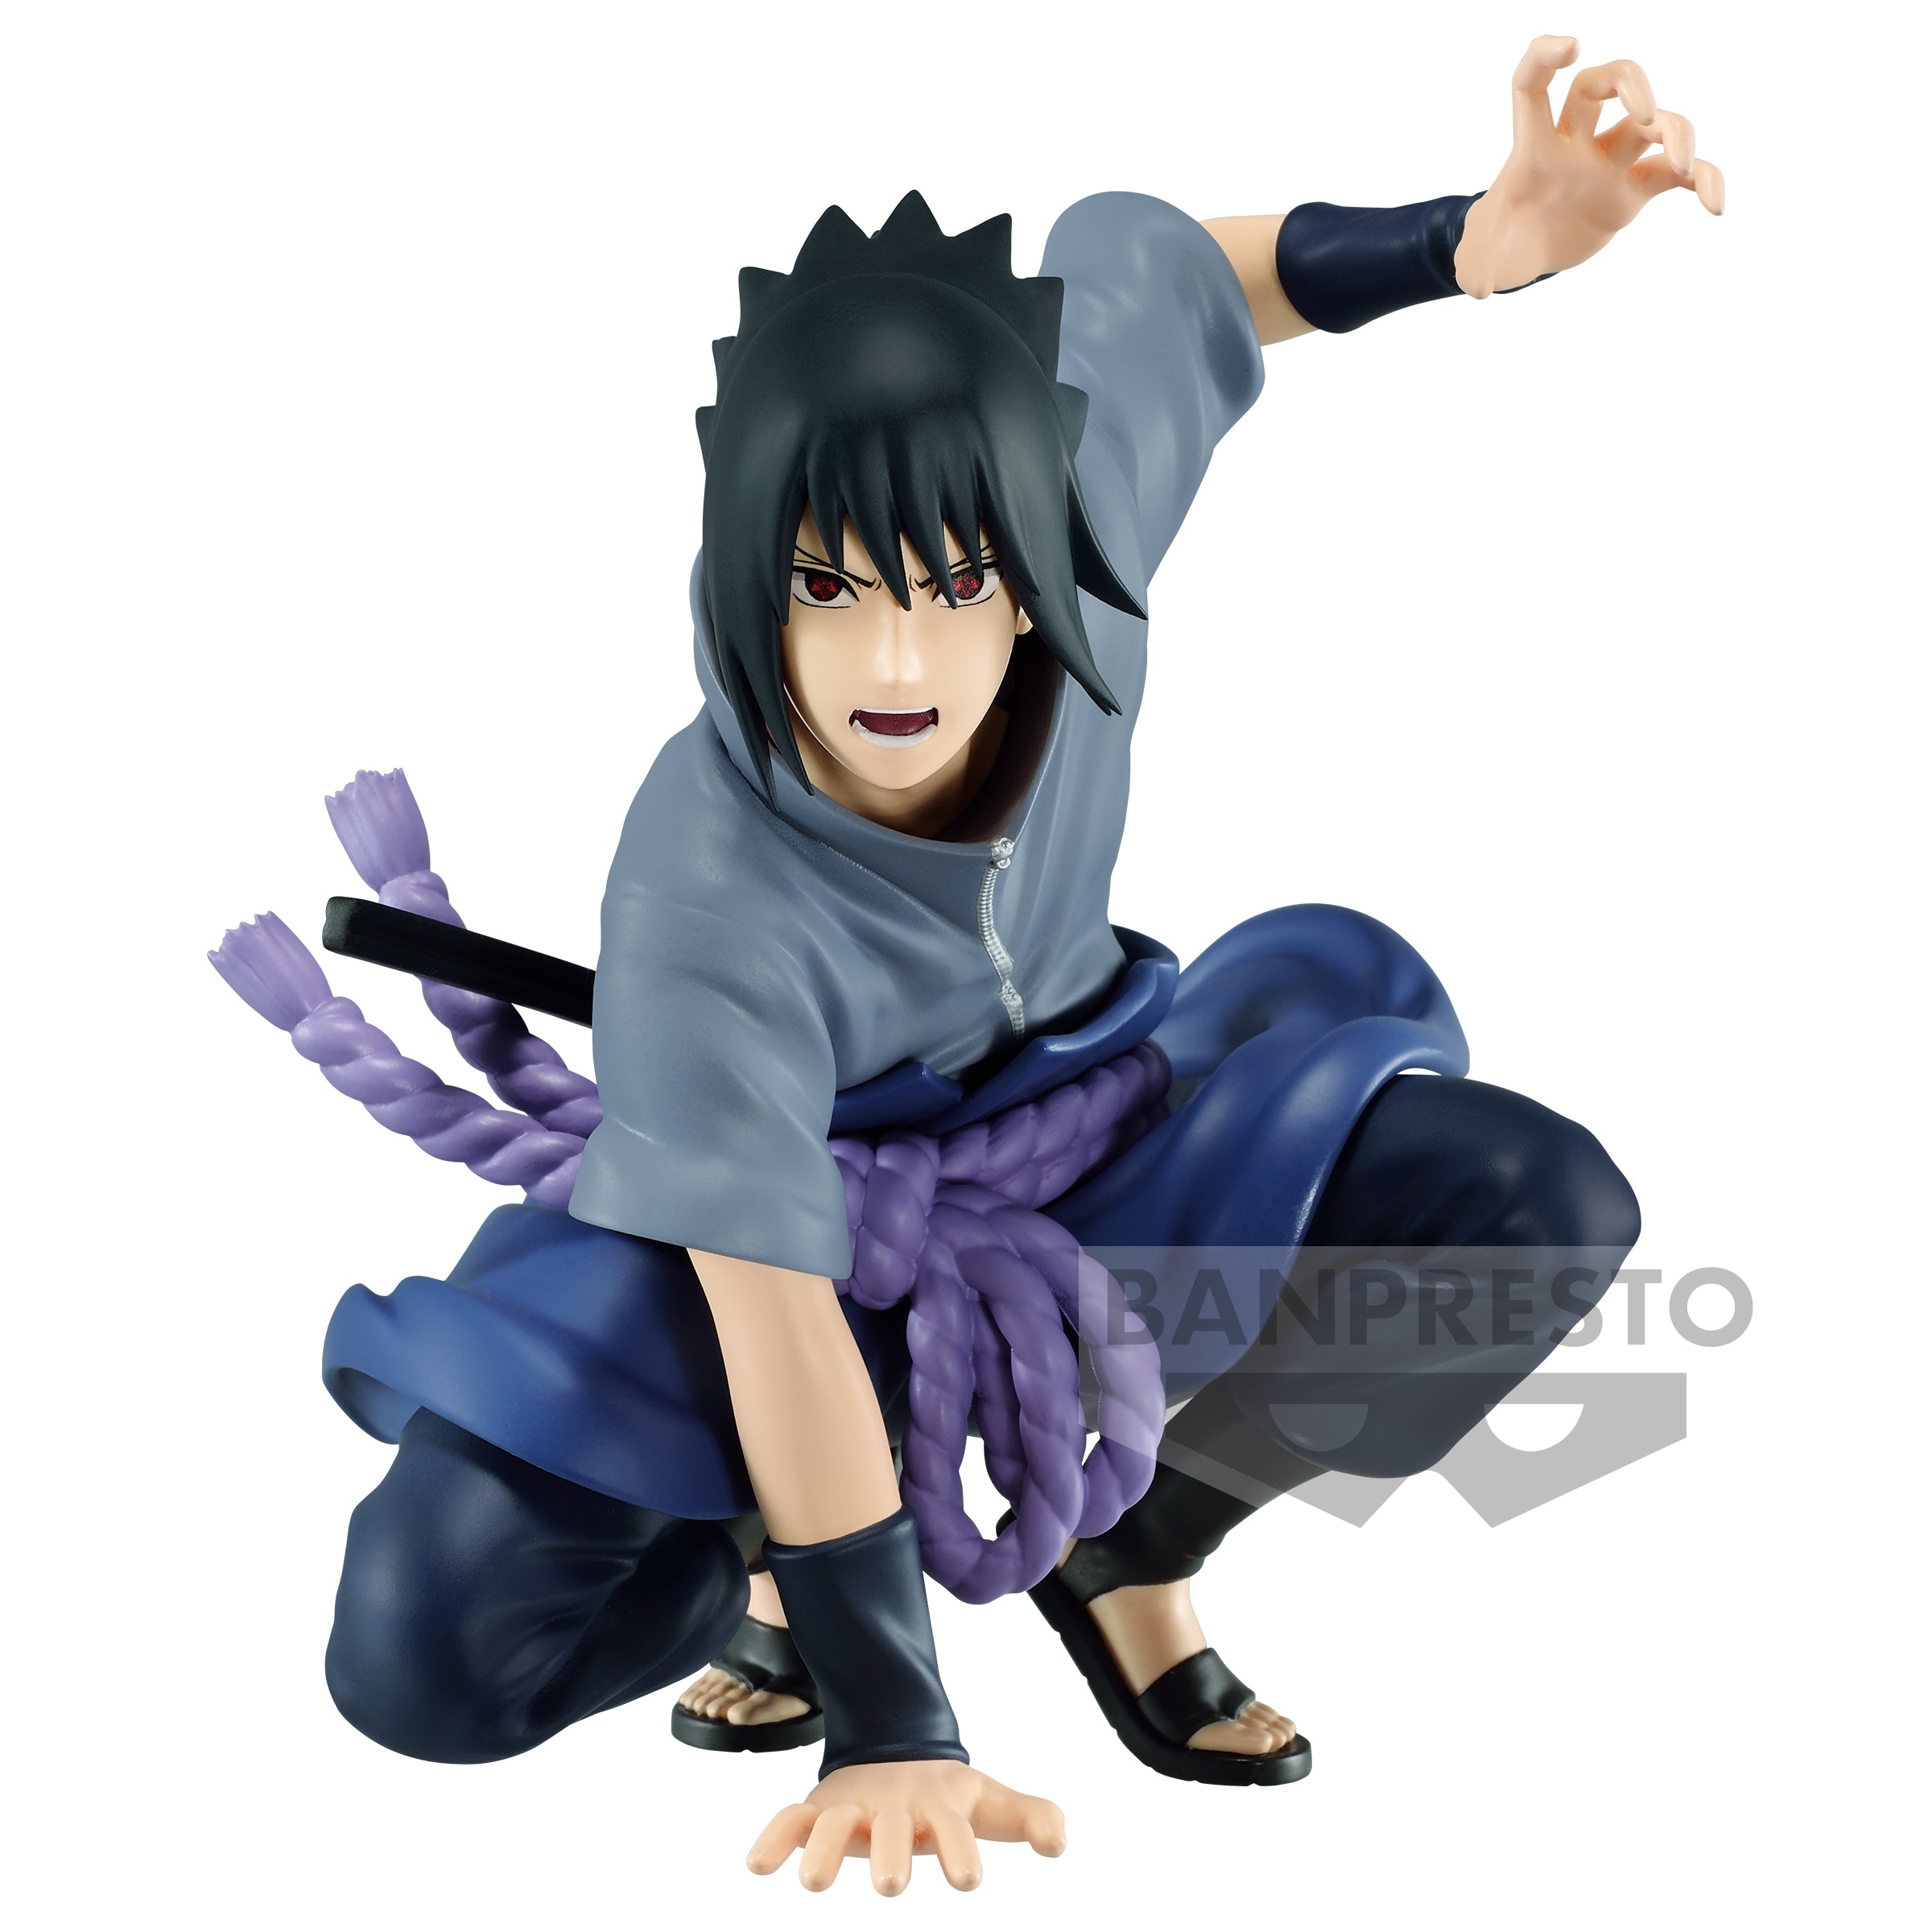 Naruto Shippuden Uchiha Sasuke Panel Spectacle Figure, 40% OFF